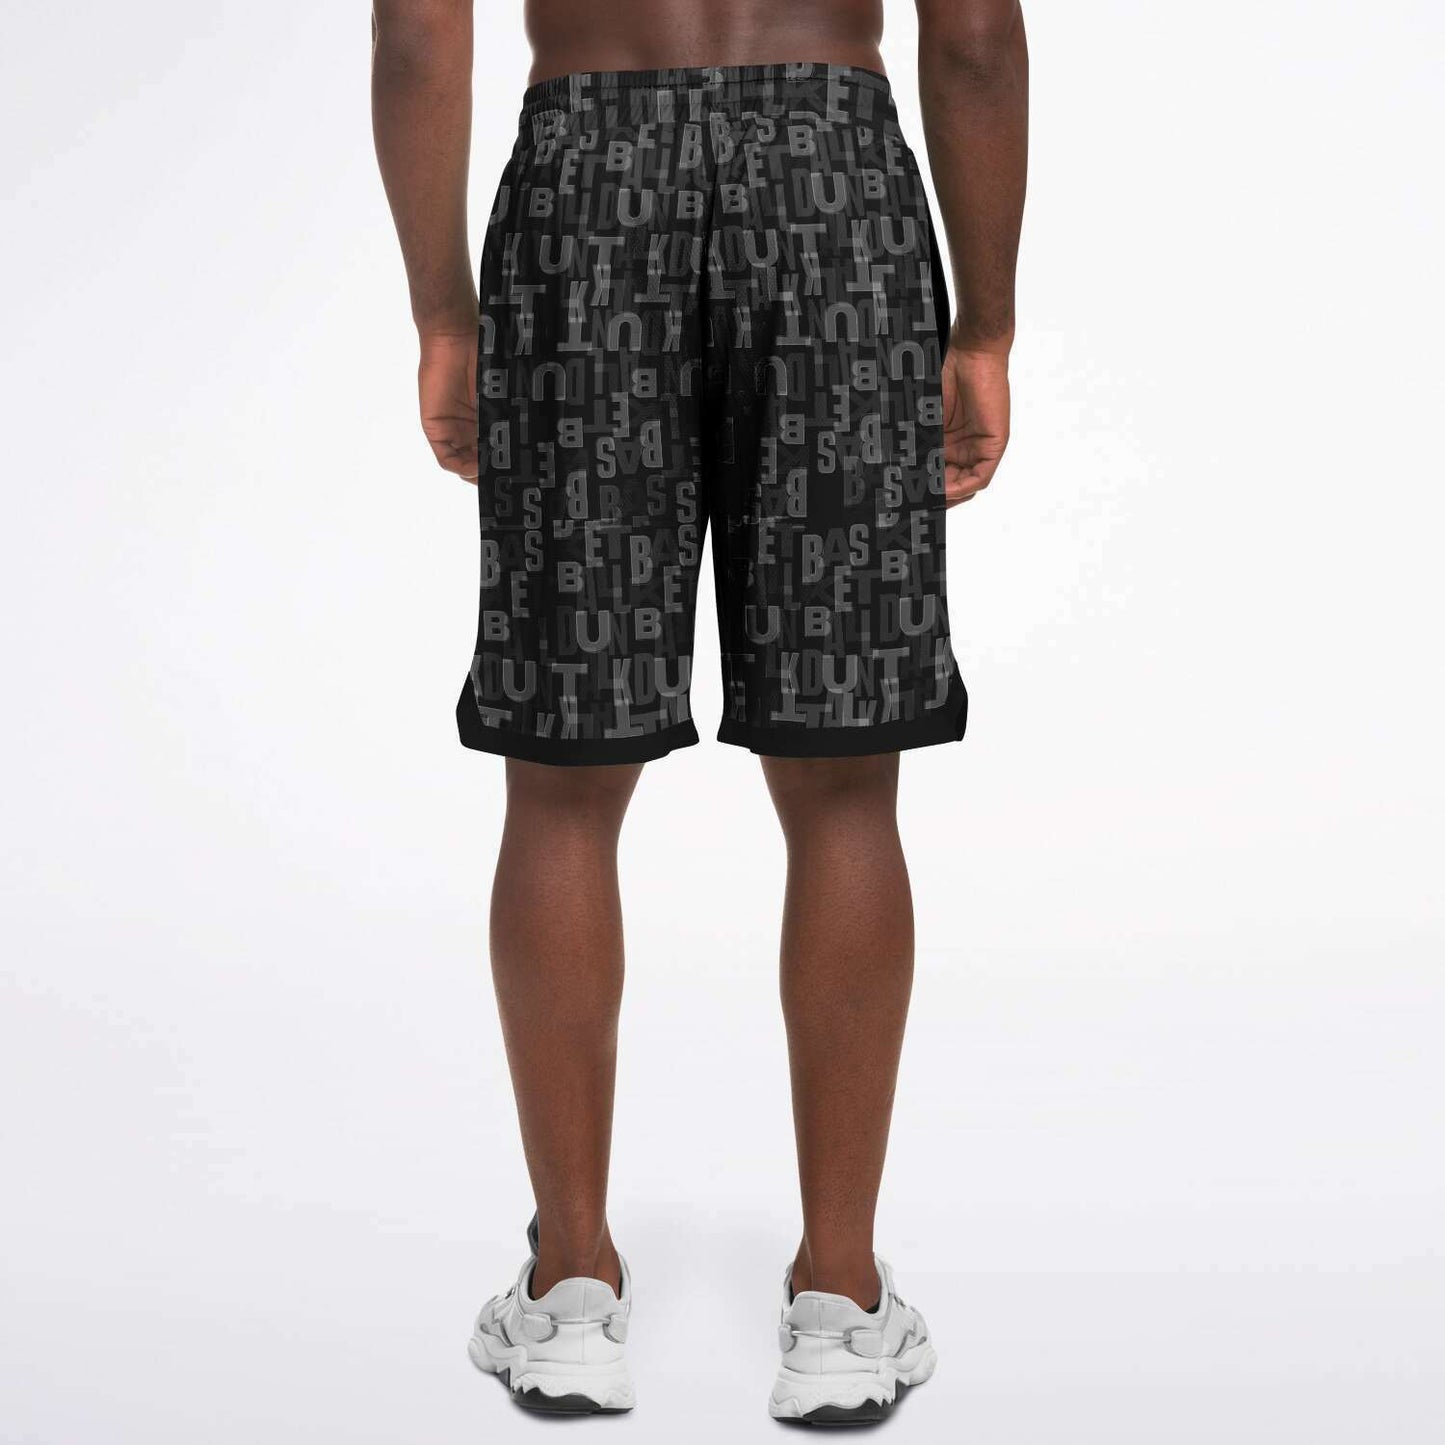 Duntalk "Court Vision" Basketball Shorts - White/Black